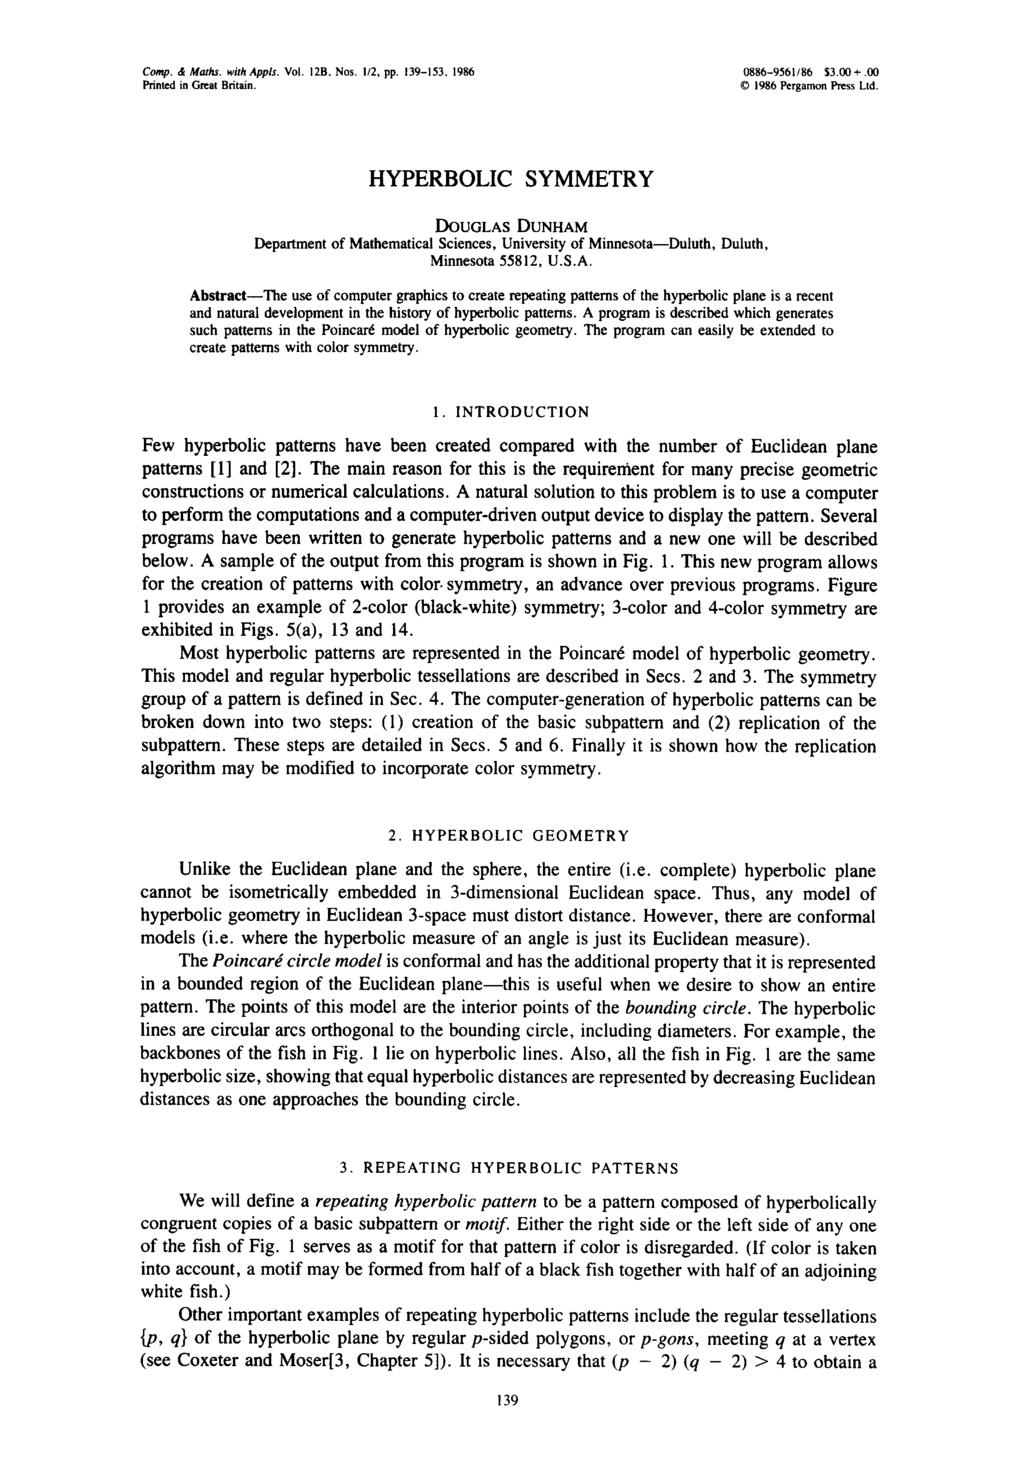 Comp. & Maths. with Appls. Vol. 12B, Nos. I/2, pp. 139-153, 1986 0886-9561/86 $3.00+.00 Printed in Great Britain. 1986 Pergamon Press Ltd.